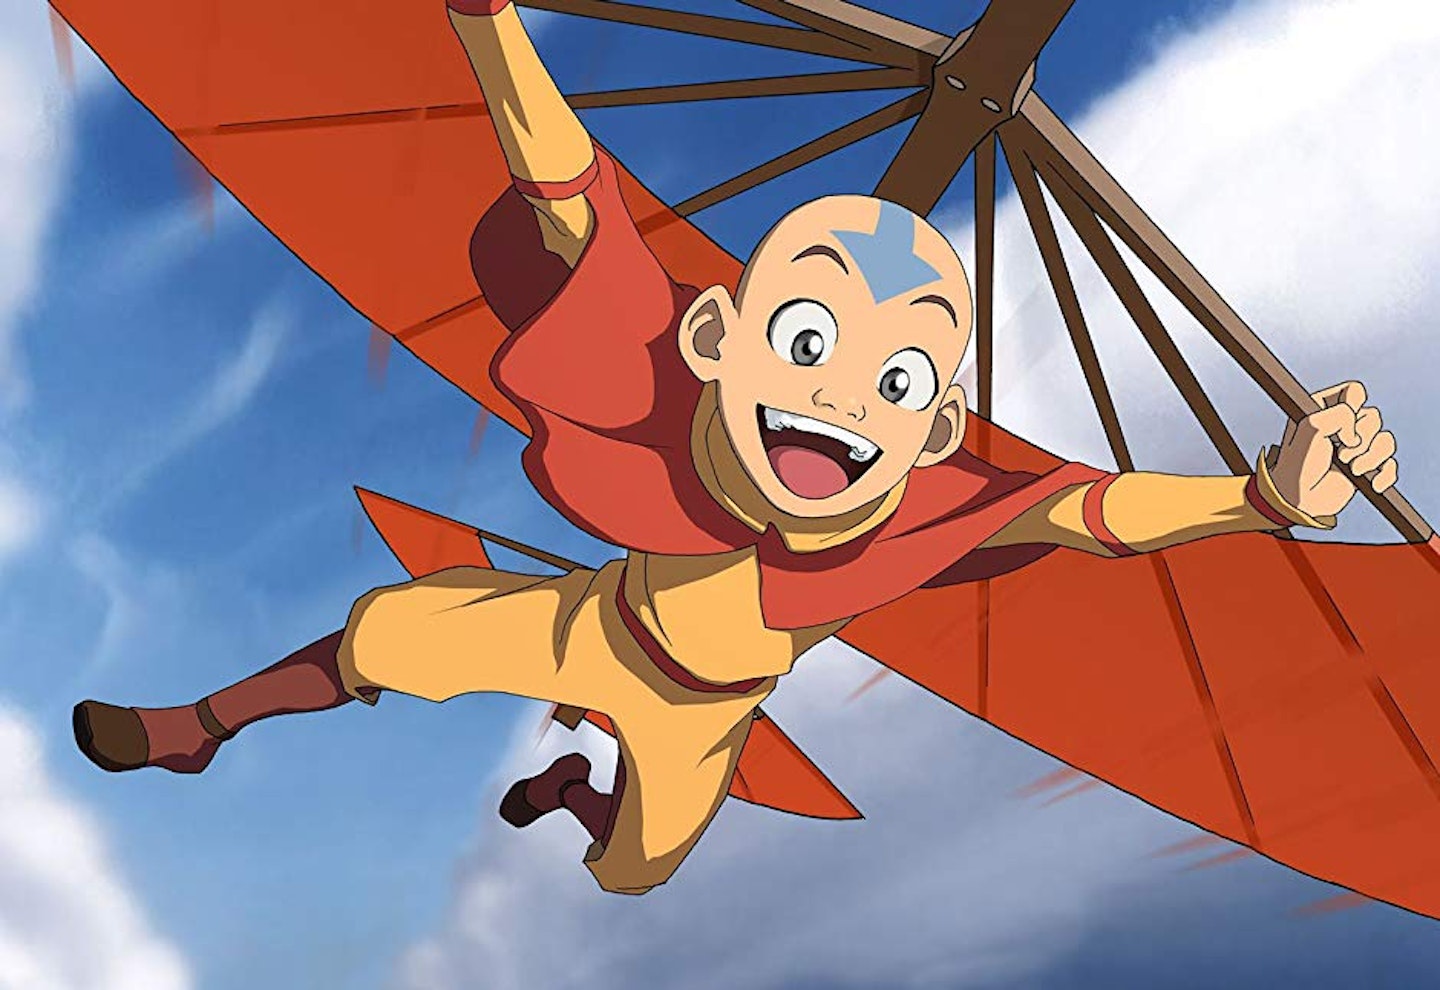 Avatar: The Last Airbender (animated)